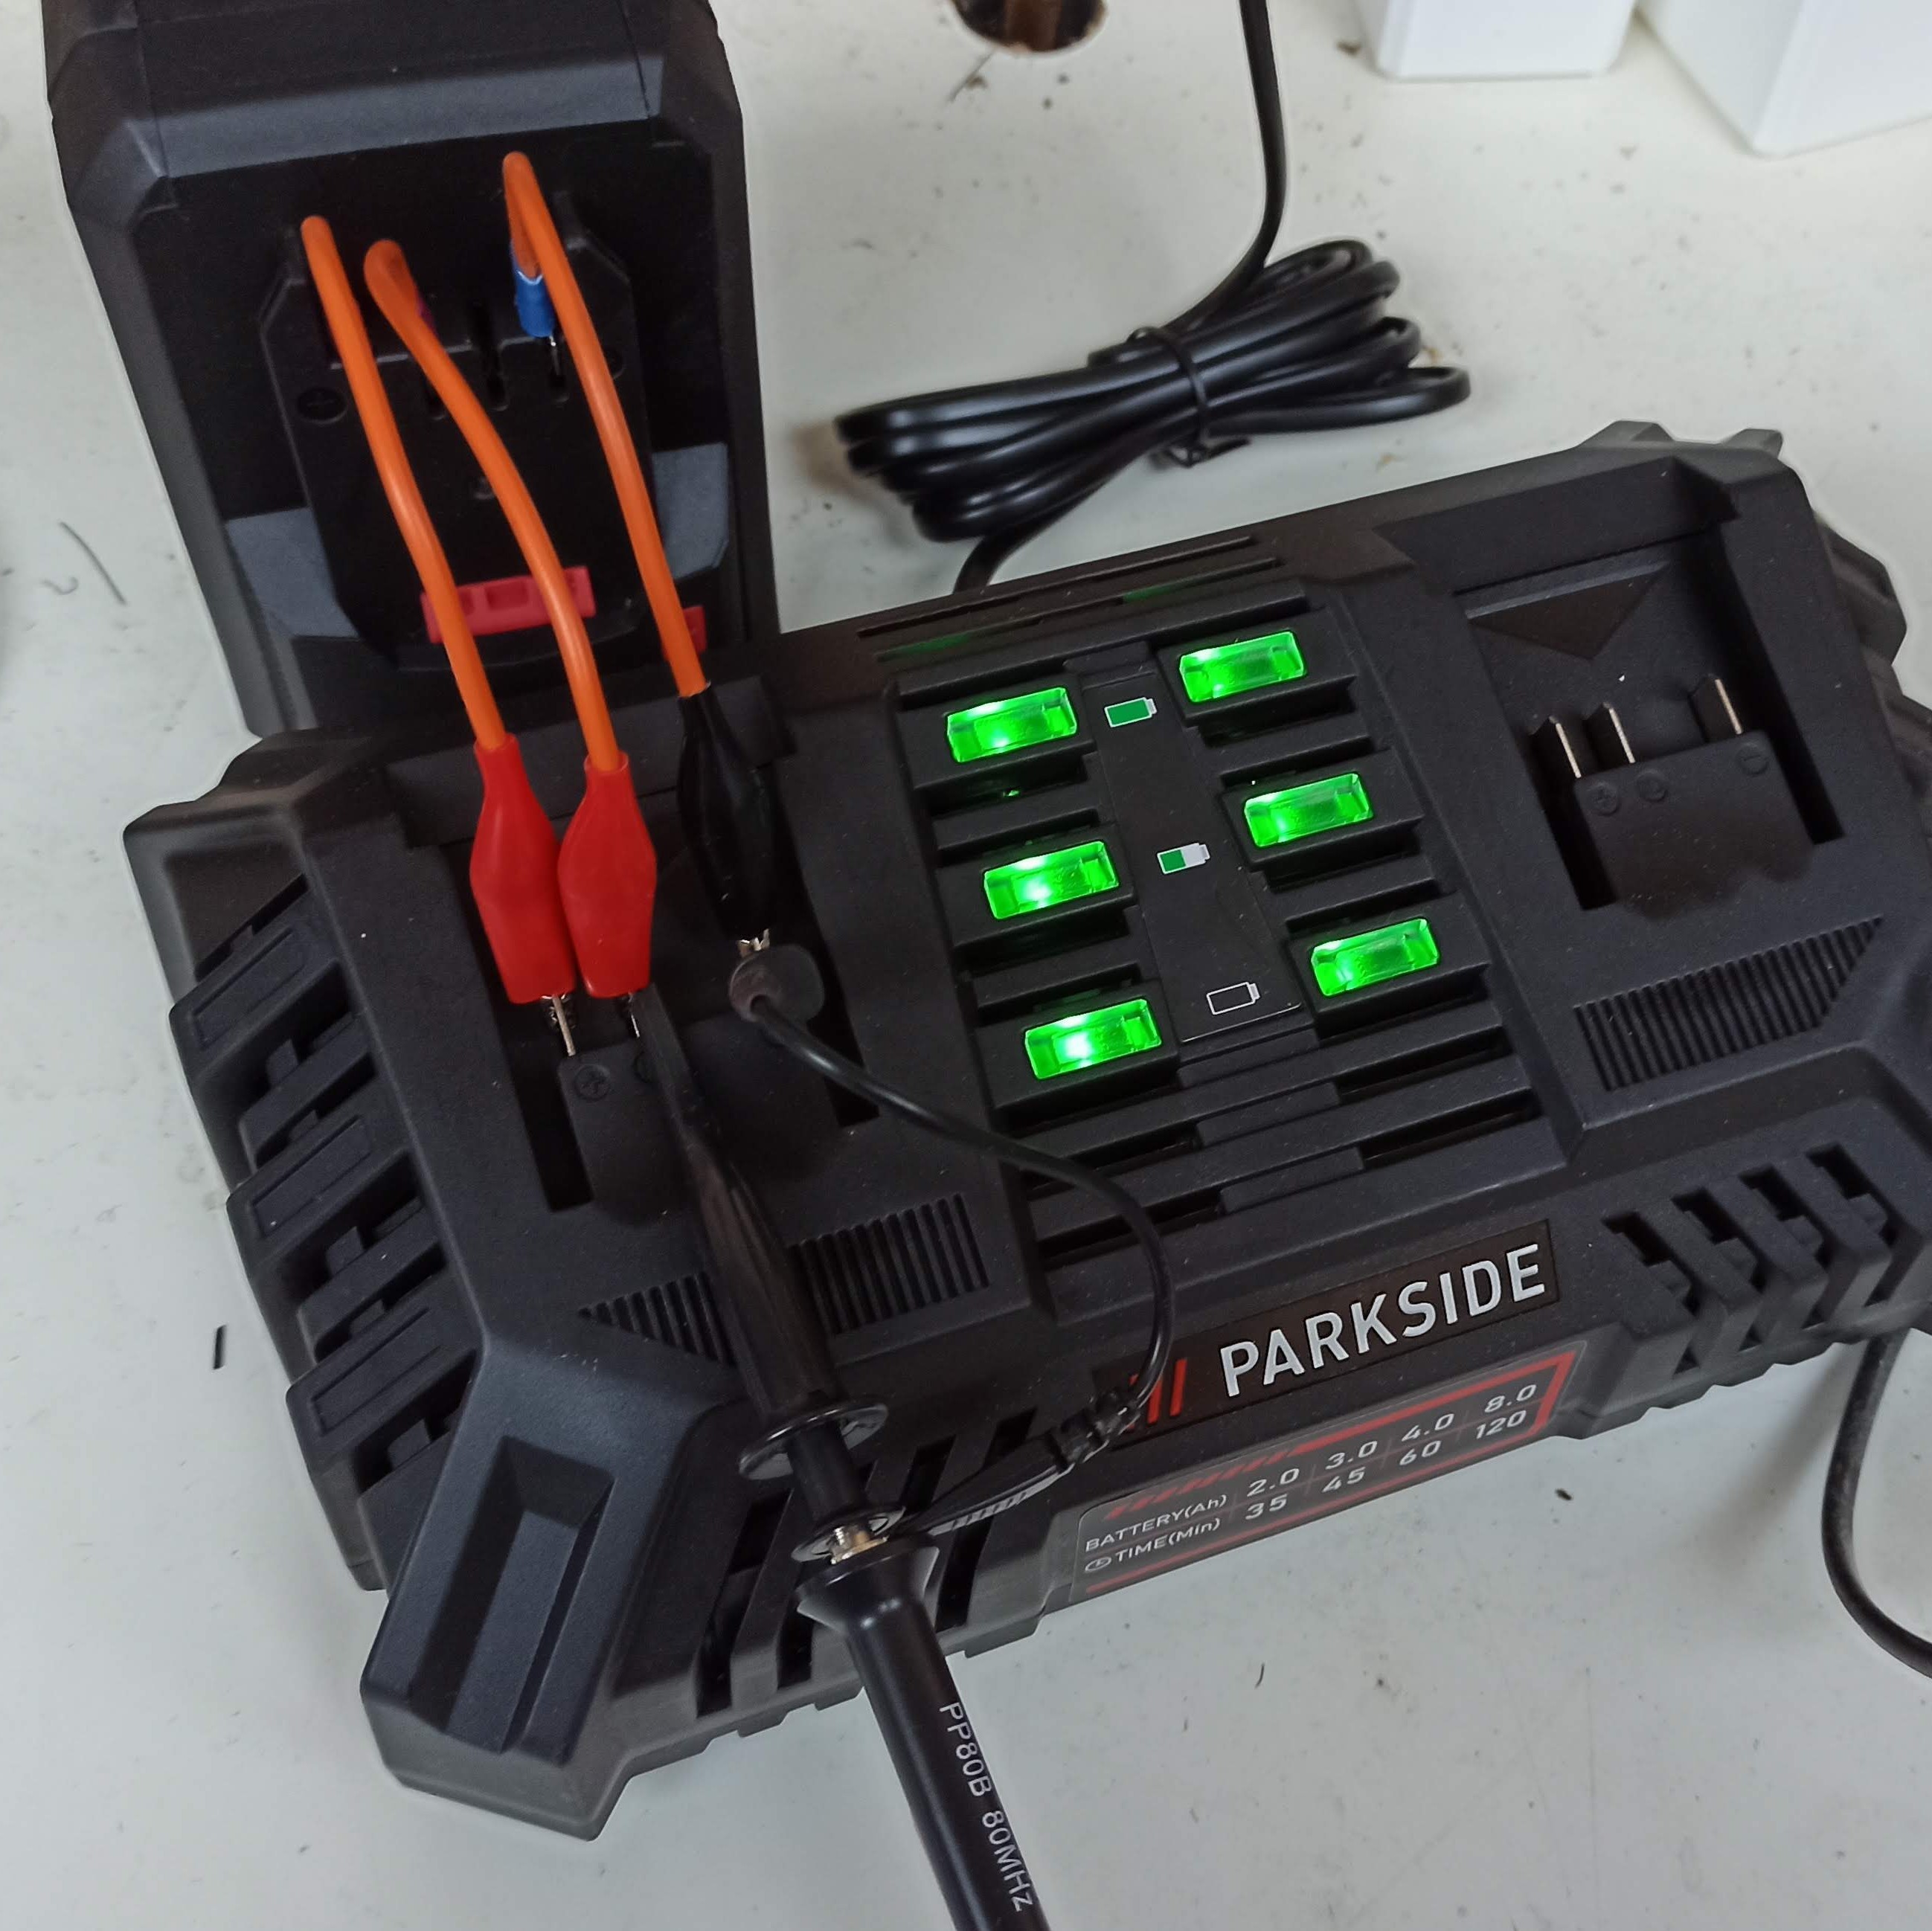 Parkside Performance Smart Battery PAPS 208 A1 20V 8Ah REVIEW 